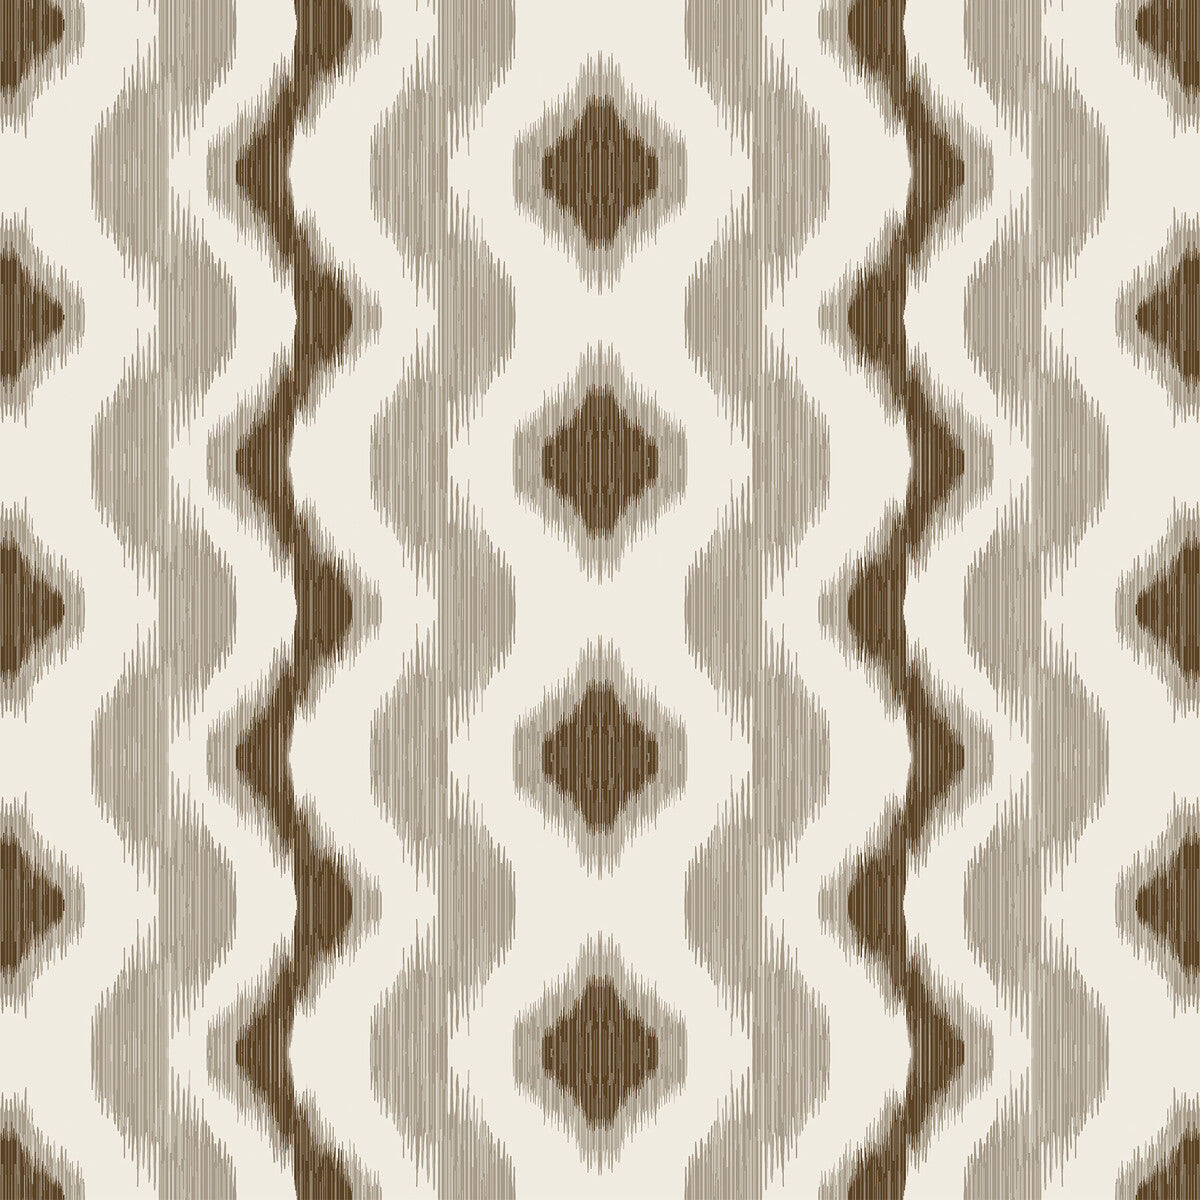 Cala Ferrera fabric in topo color - pattern GDT5683.002.0 - by Gaston y Daniela in the Gaston Maiorica collection